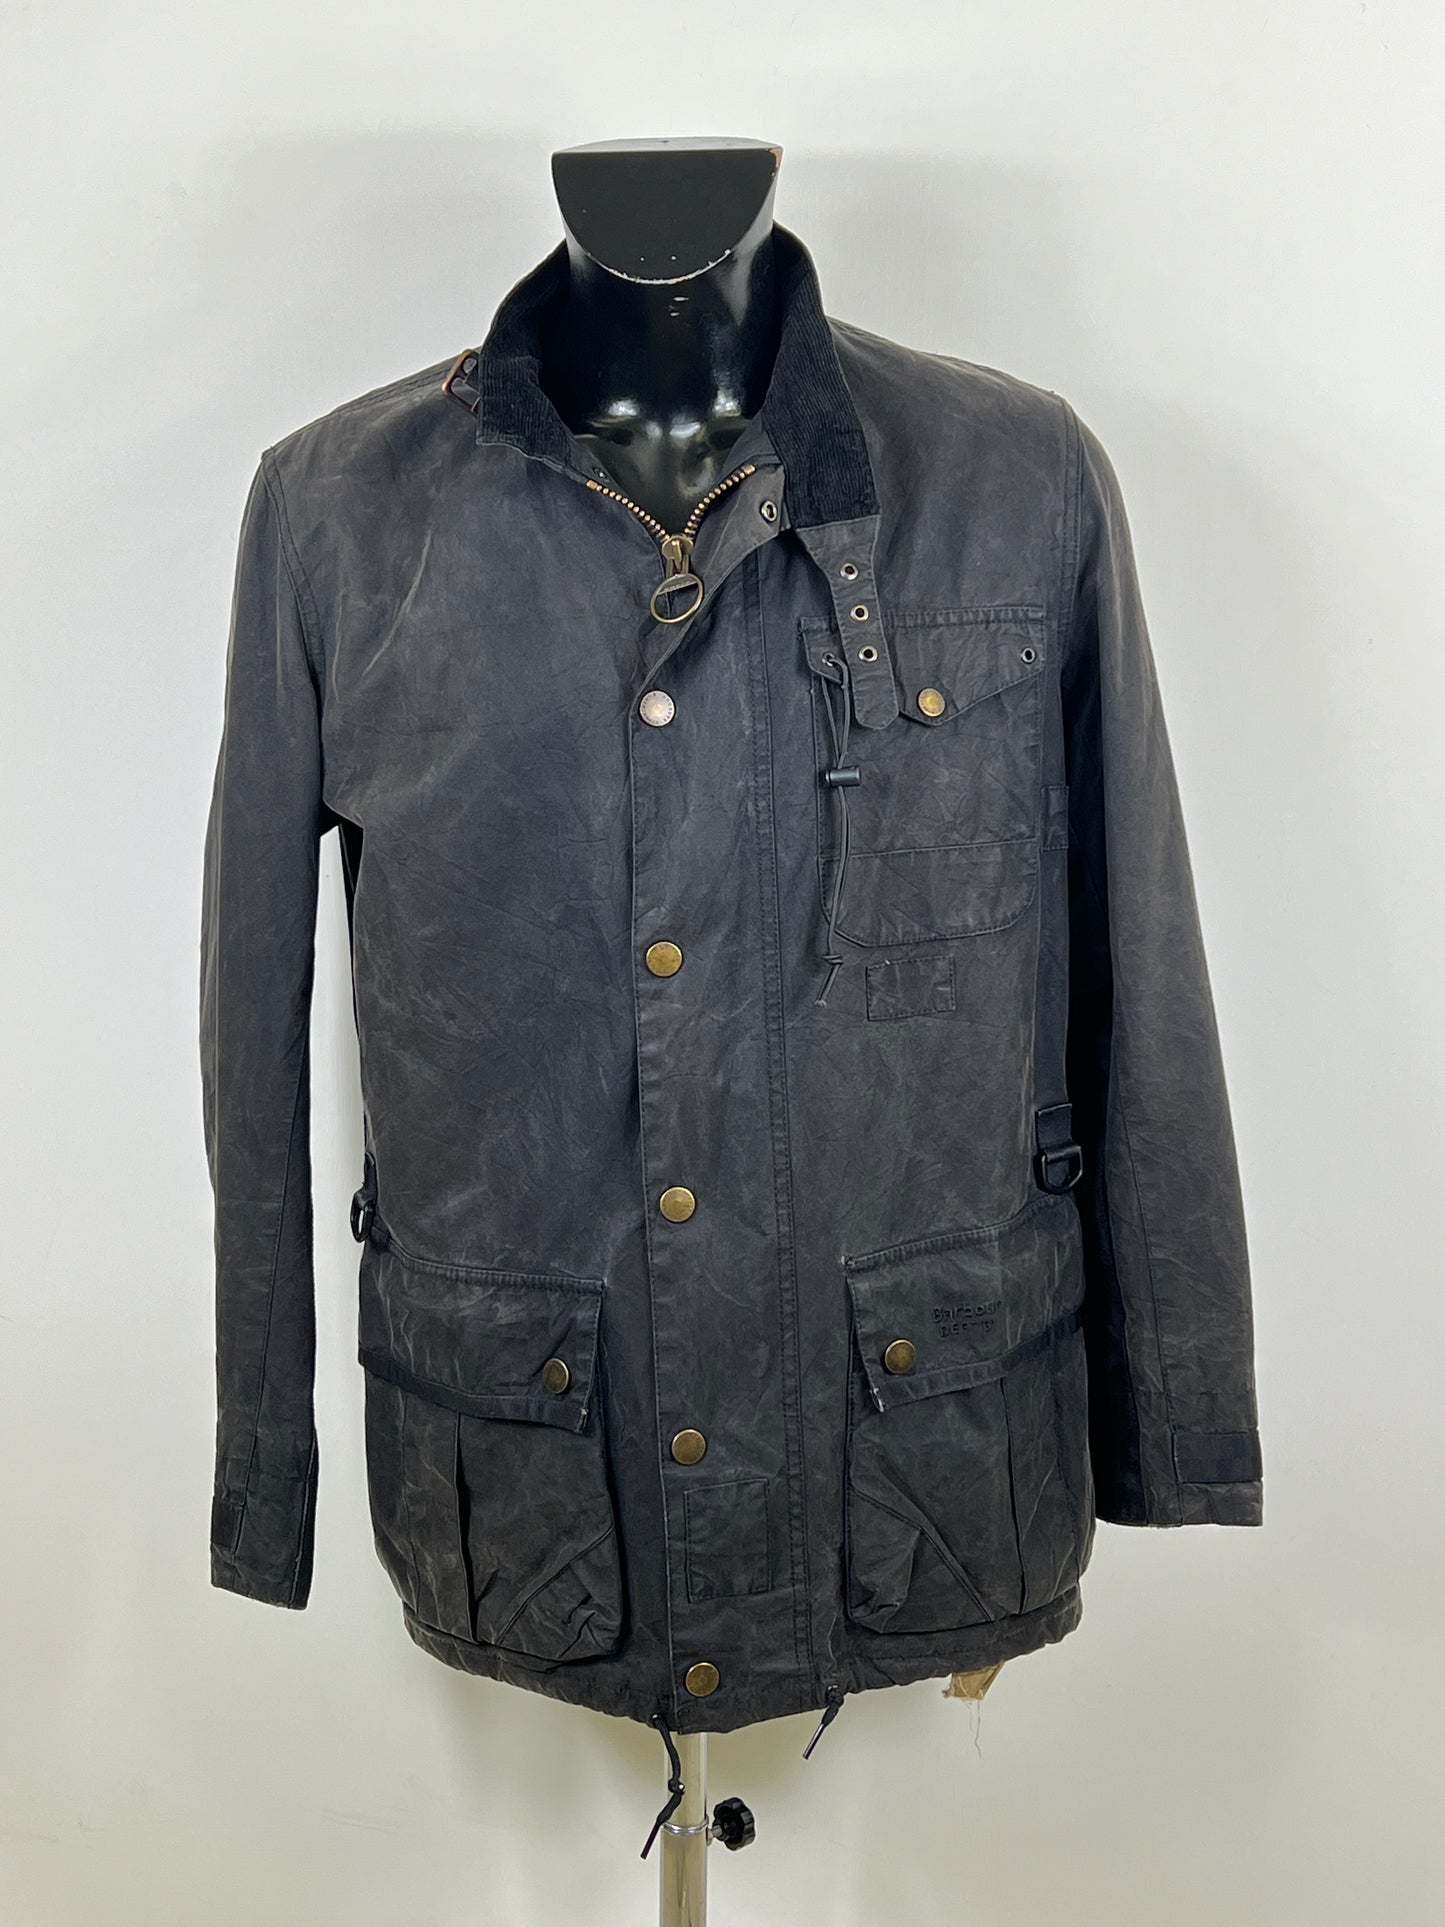 Giacca Barbour Dept B nera Sonar wax jacket Large-Black Dept B Sonar waxed jacket size L